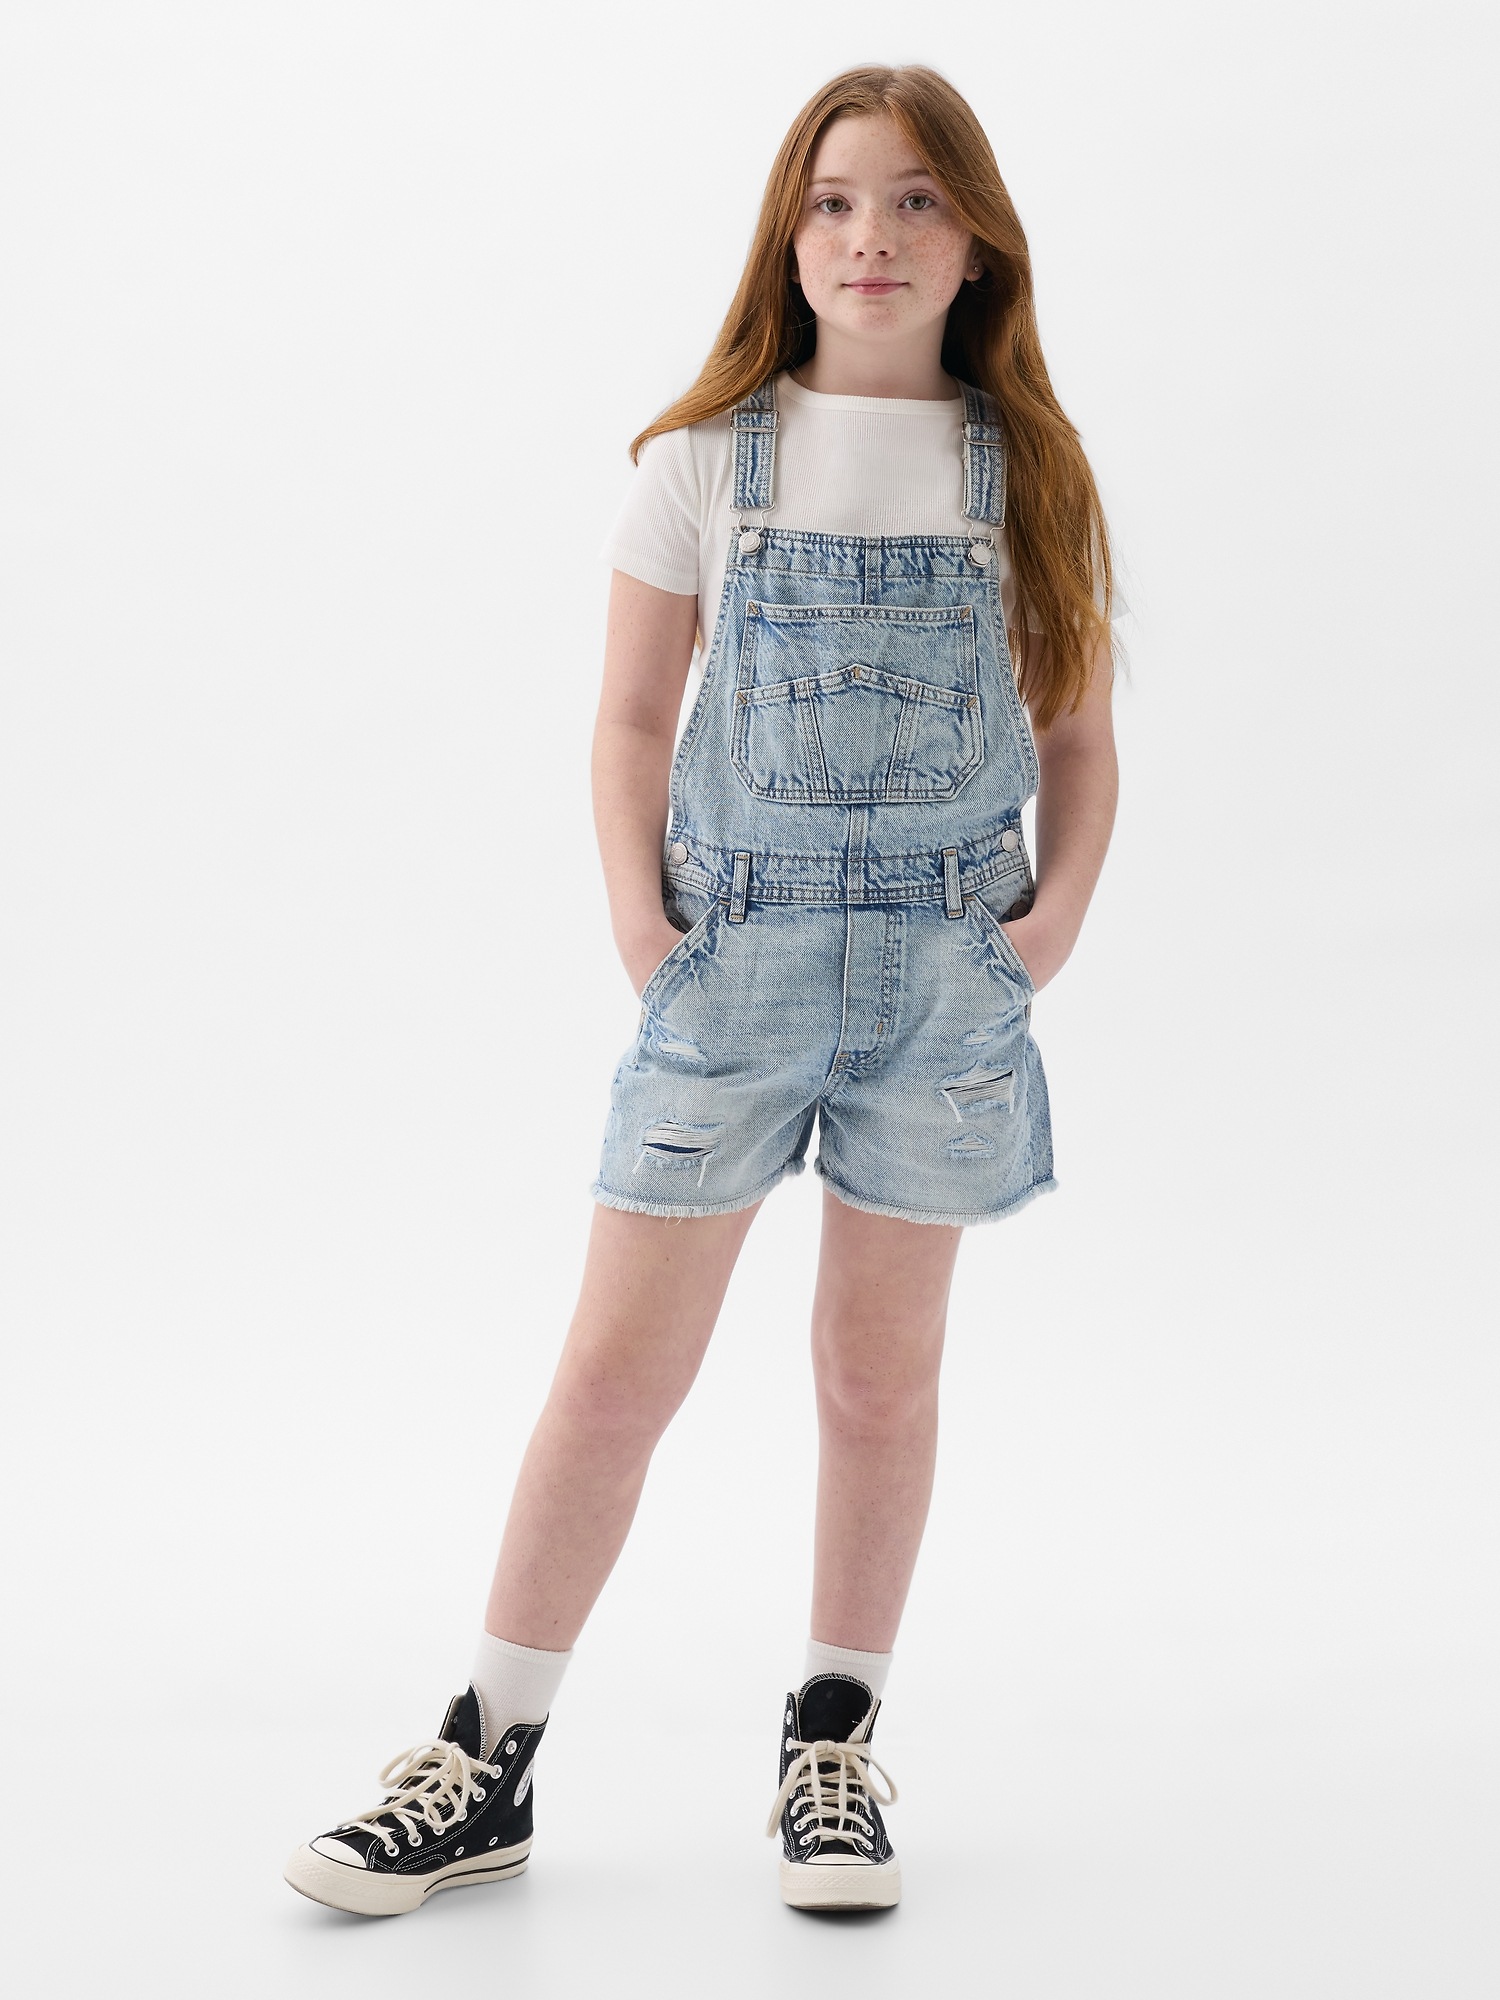 GAP Kids' Denim Bib Shorts - Girls